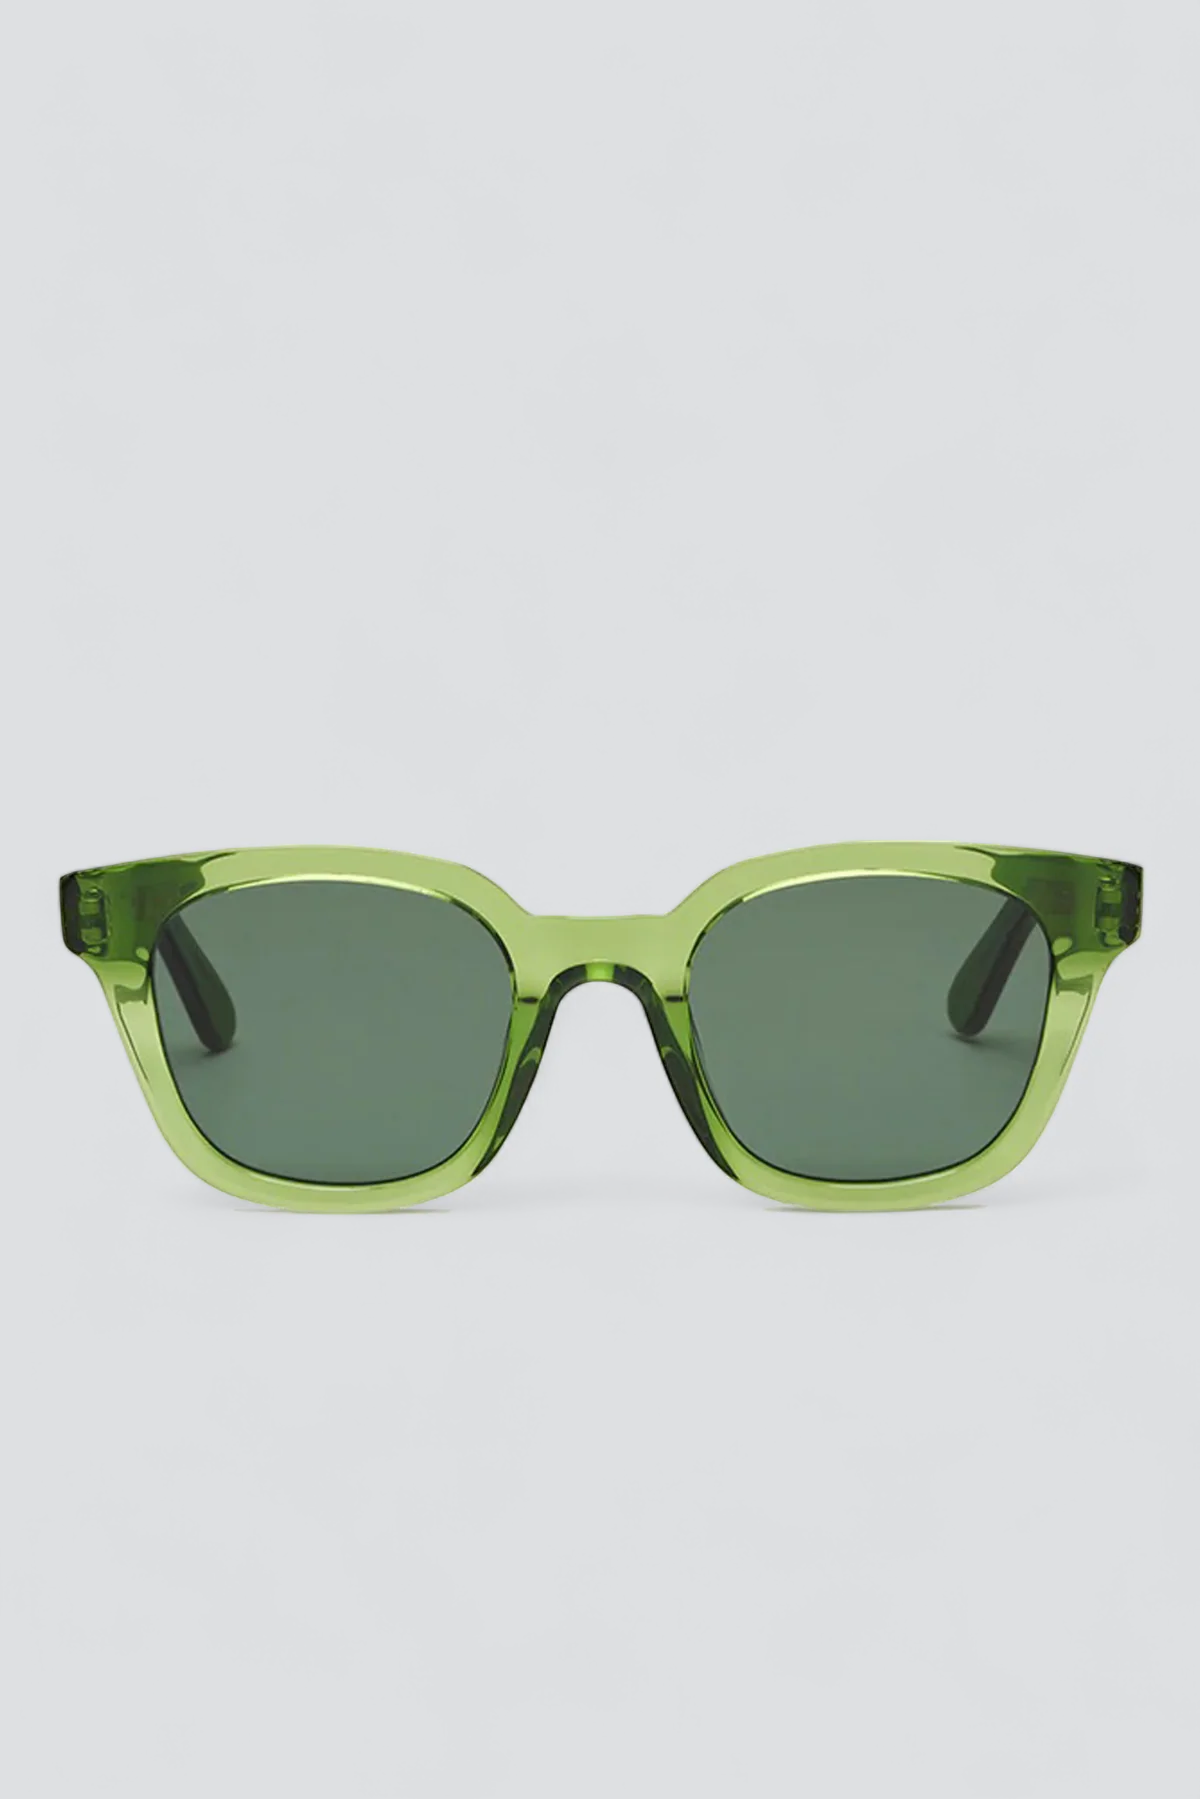 Acetate Warsaw 2 Sunglasses - Green